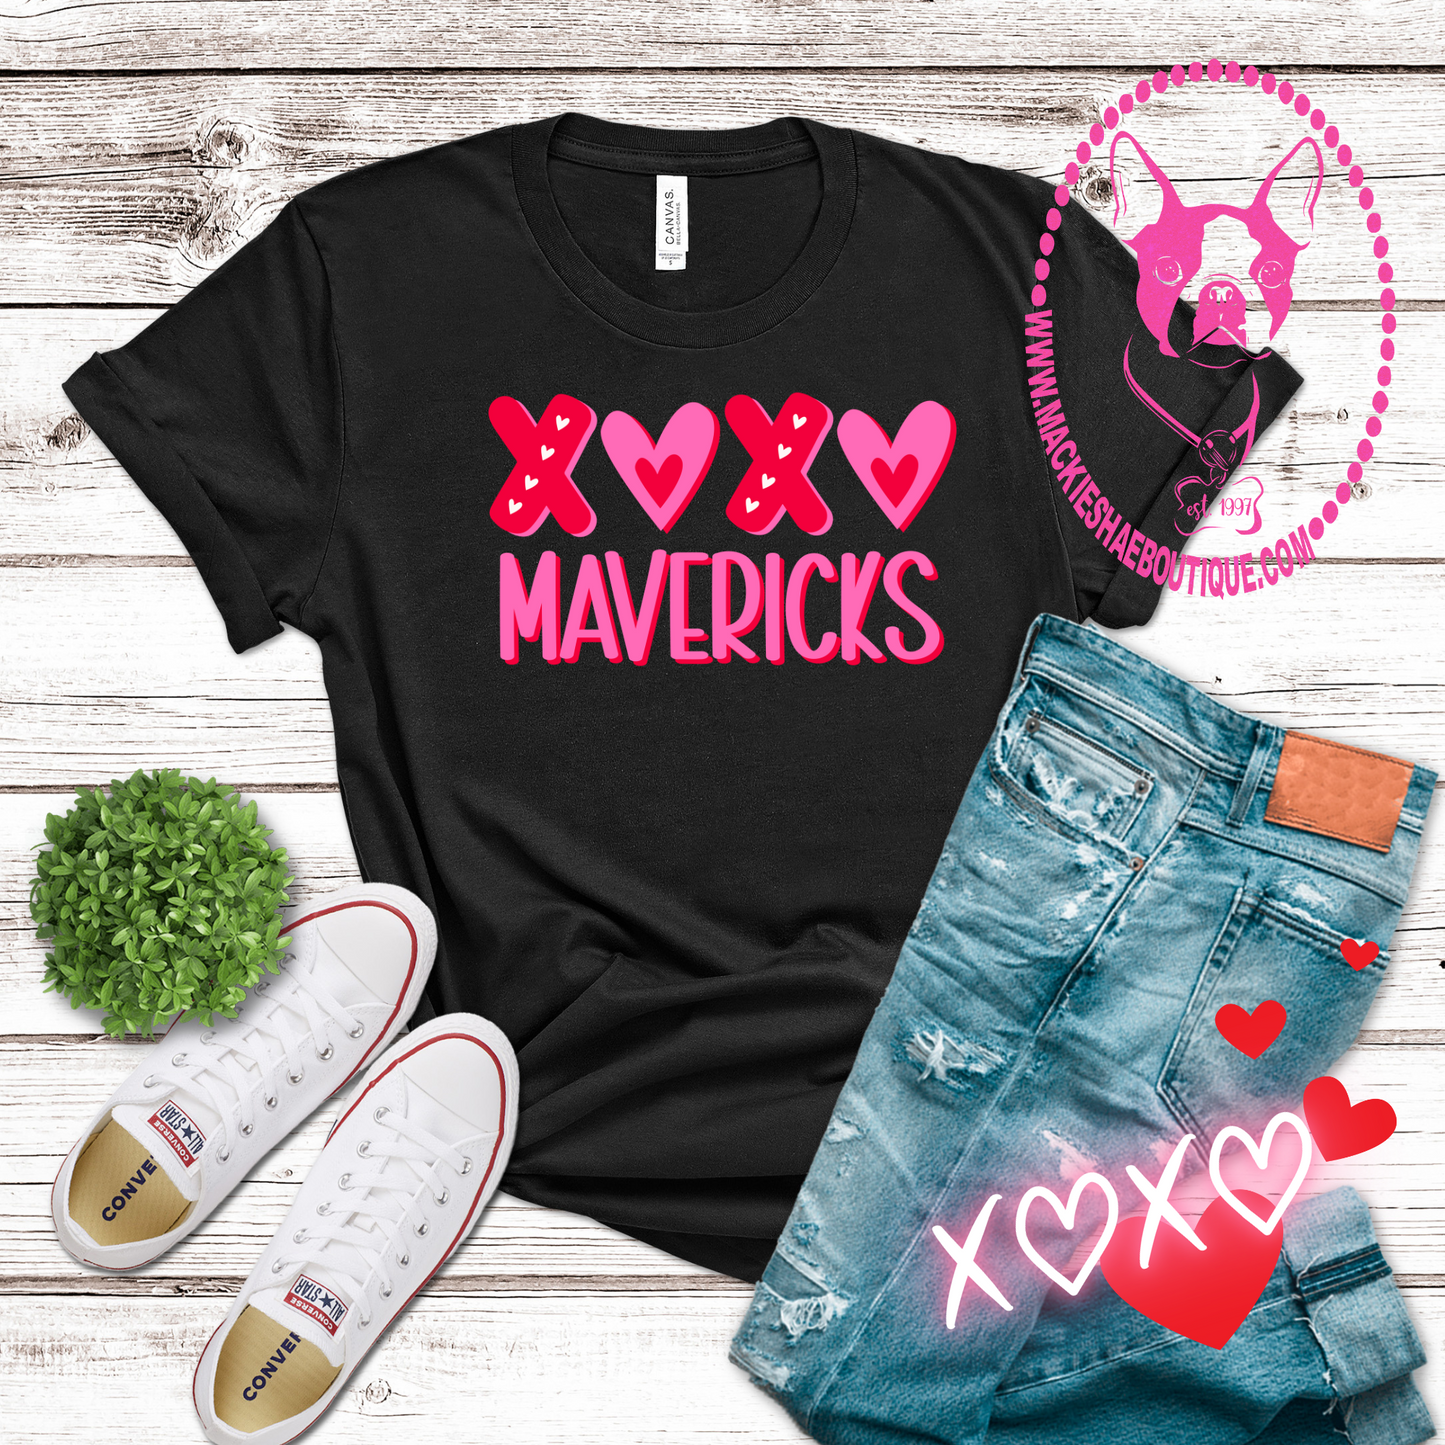 XOXO Mavericks Custom Shirt for Kids and Adults, Soft Tees and Crewneck Sweatshirts